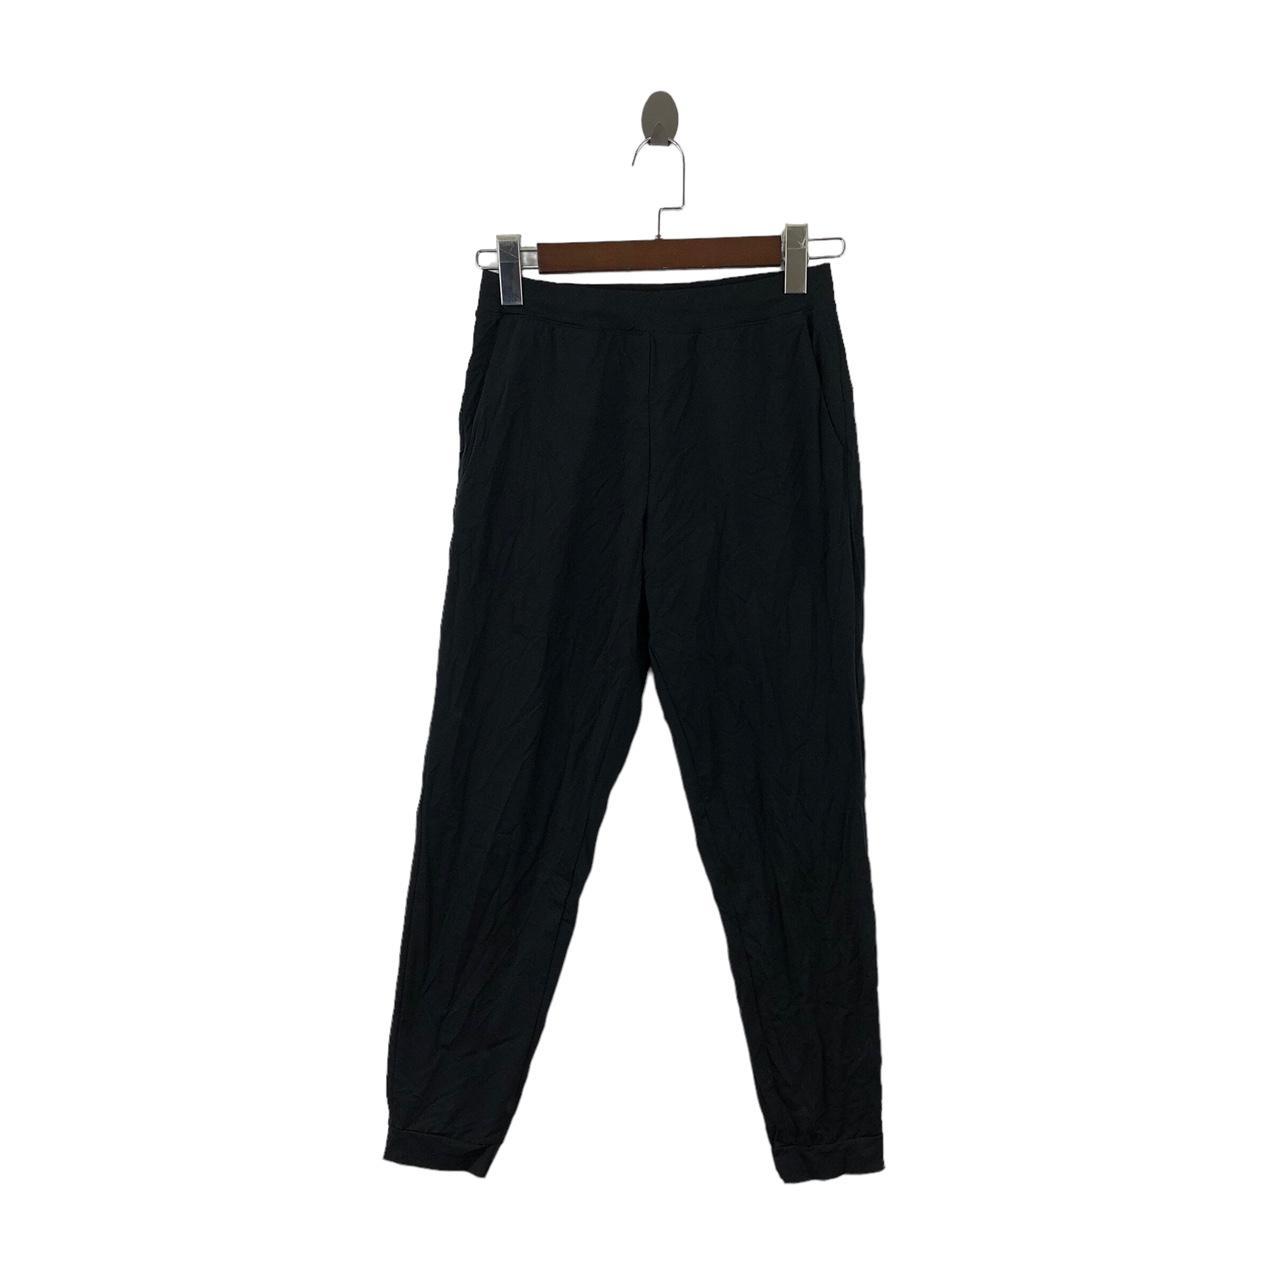 Buy Tight Pants Uniqlo online | Lazada.com.ph